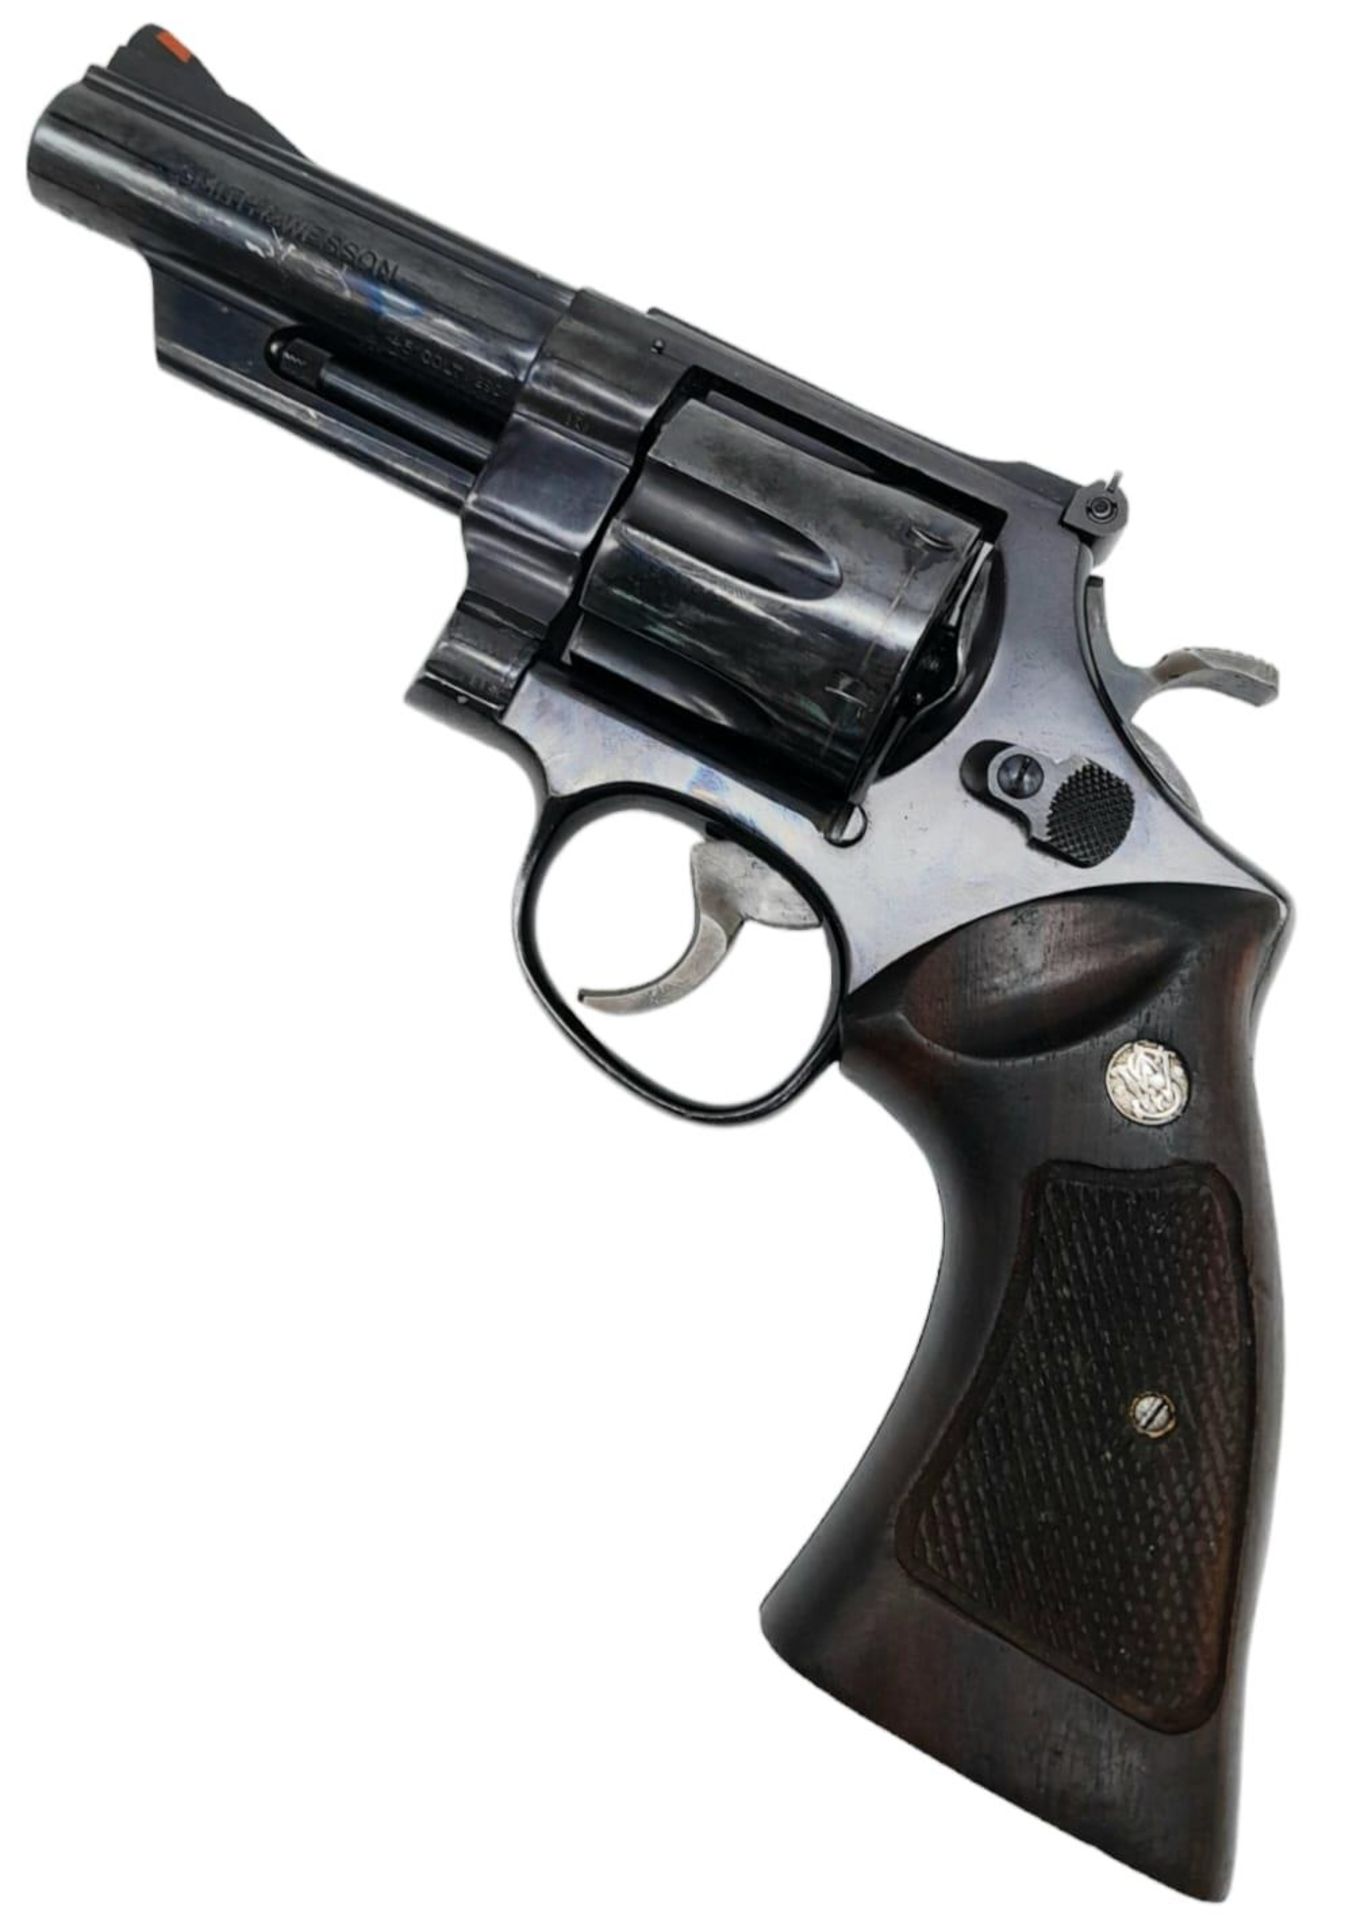 A Smith and Wesson .45 Calibre Revolver. This USA made pistol has a 4 inch barrel with a nice dark - Bild 4 aus 17